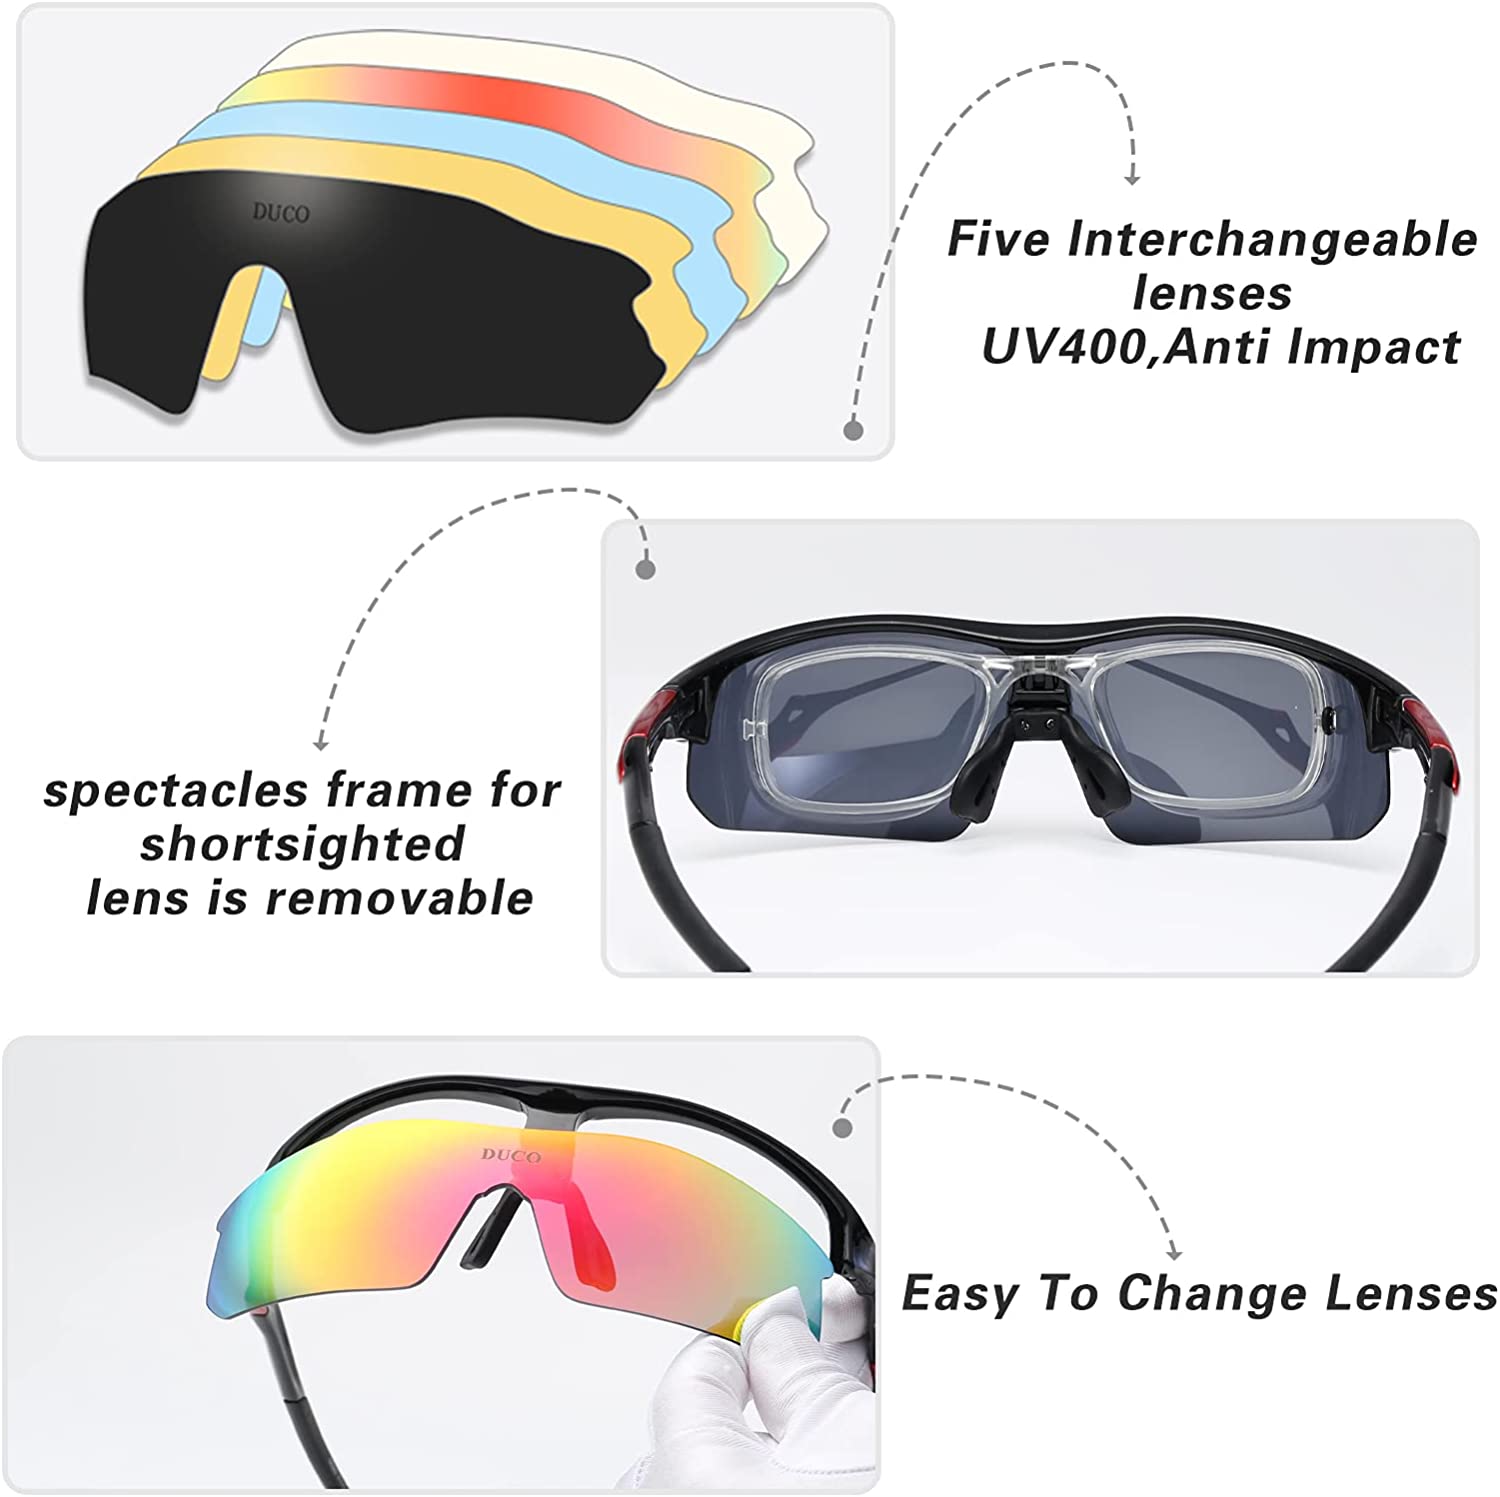 $14,950 Complete Eyewear Line! - Eye Q Optical